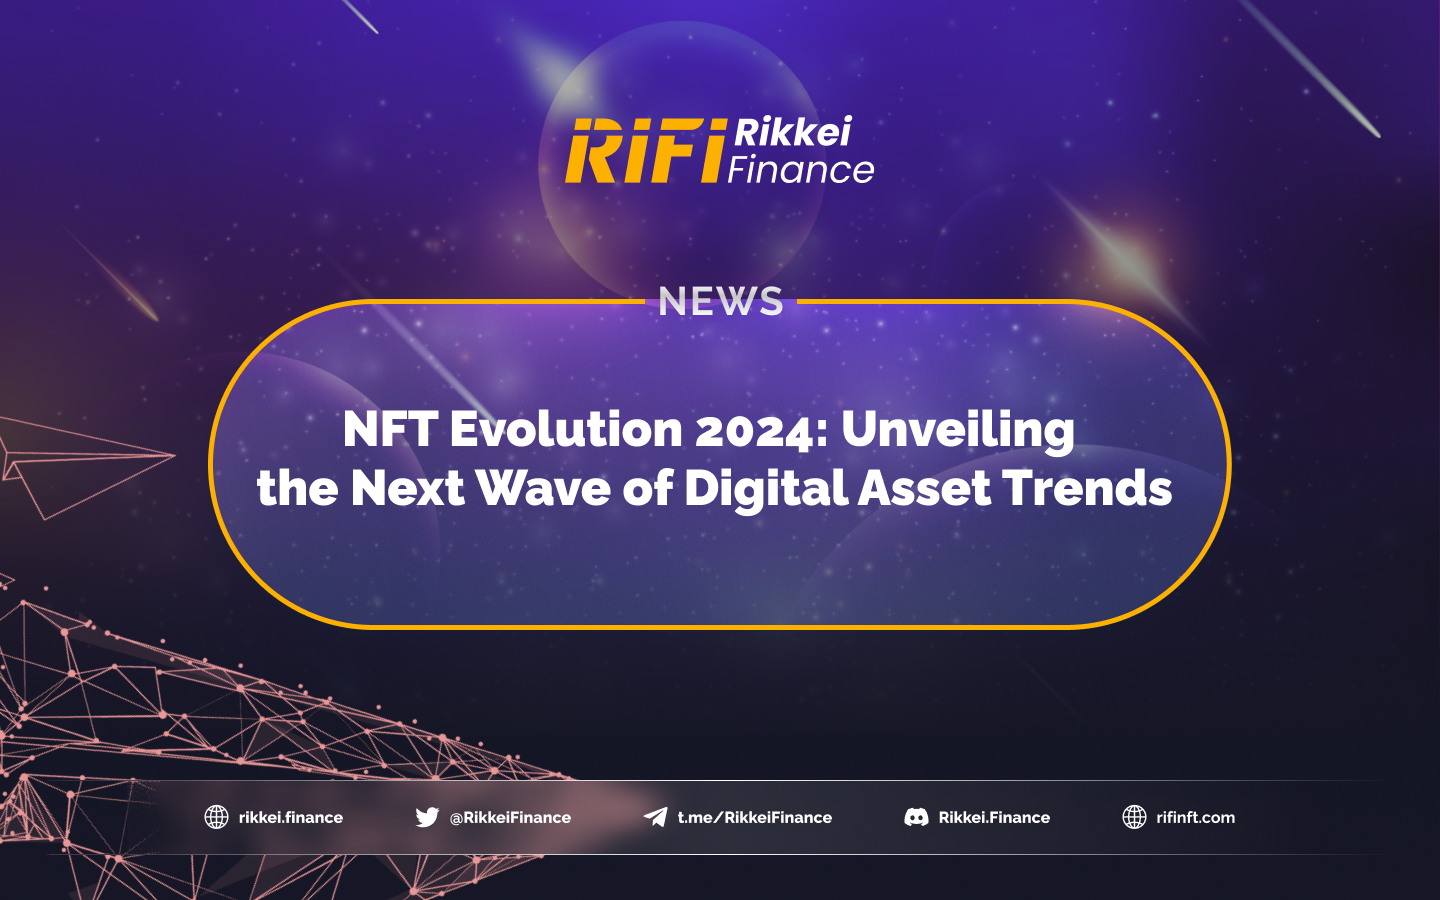 NFT Evolution 2024: Unveiling the Next Wave of Digital Asset Trends